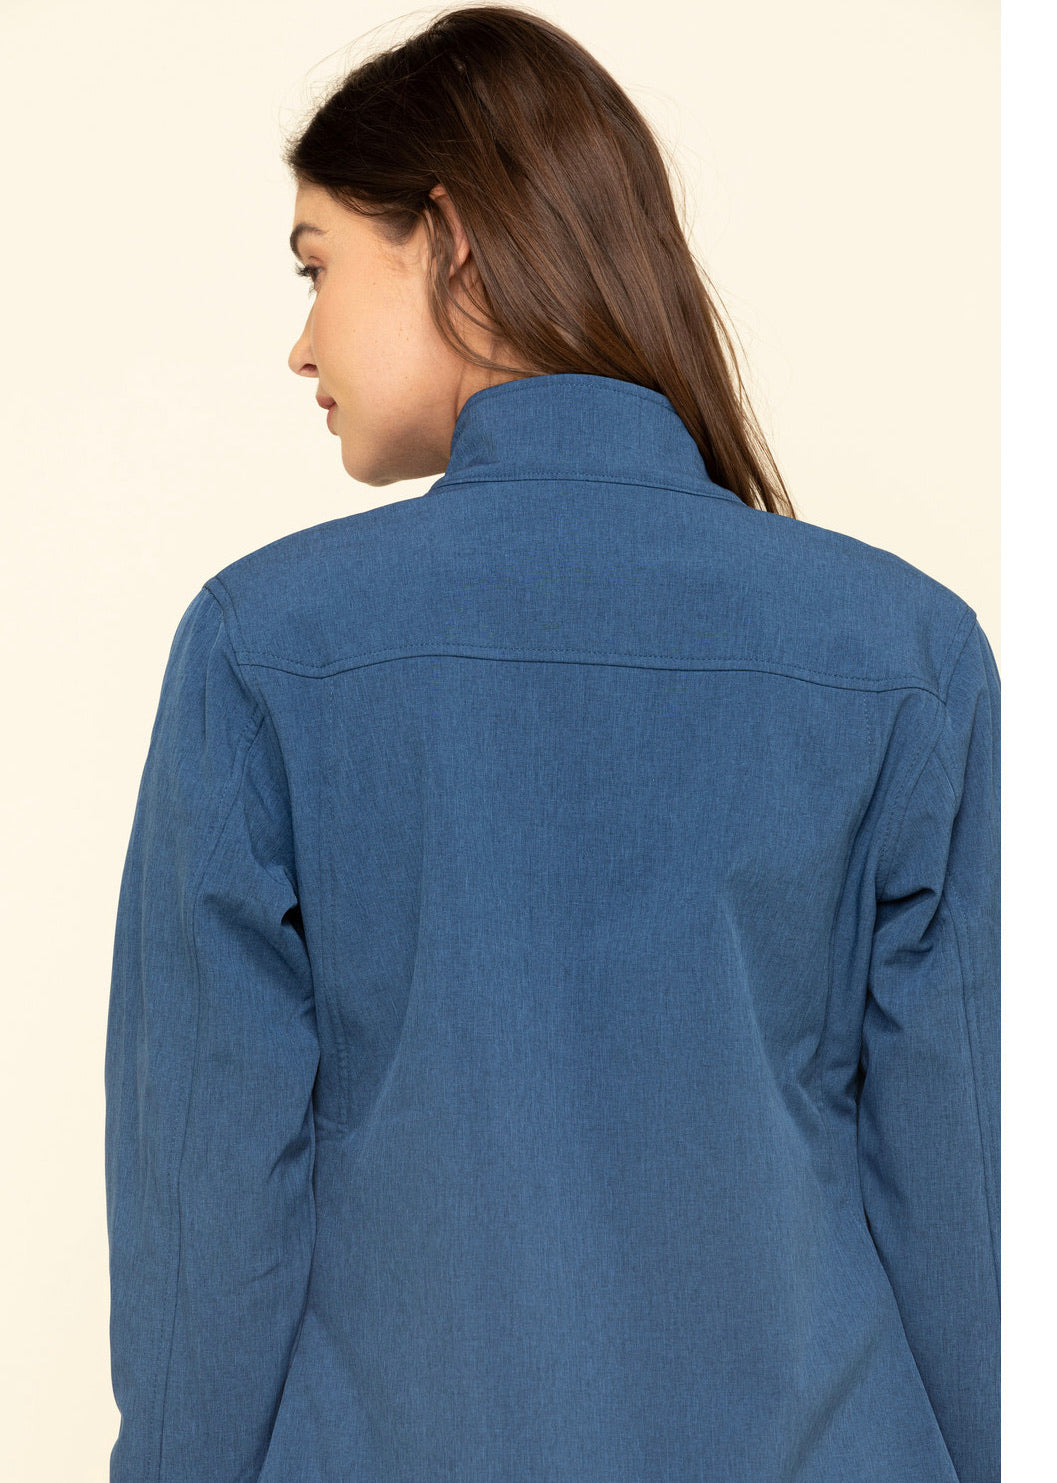 Ariat Ladies New Team Softshell Jacket in Marne Blue Heather